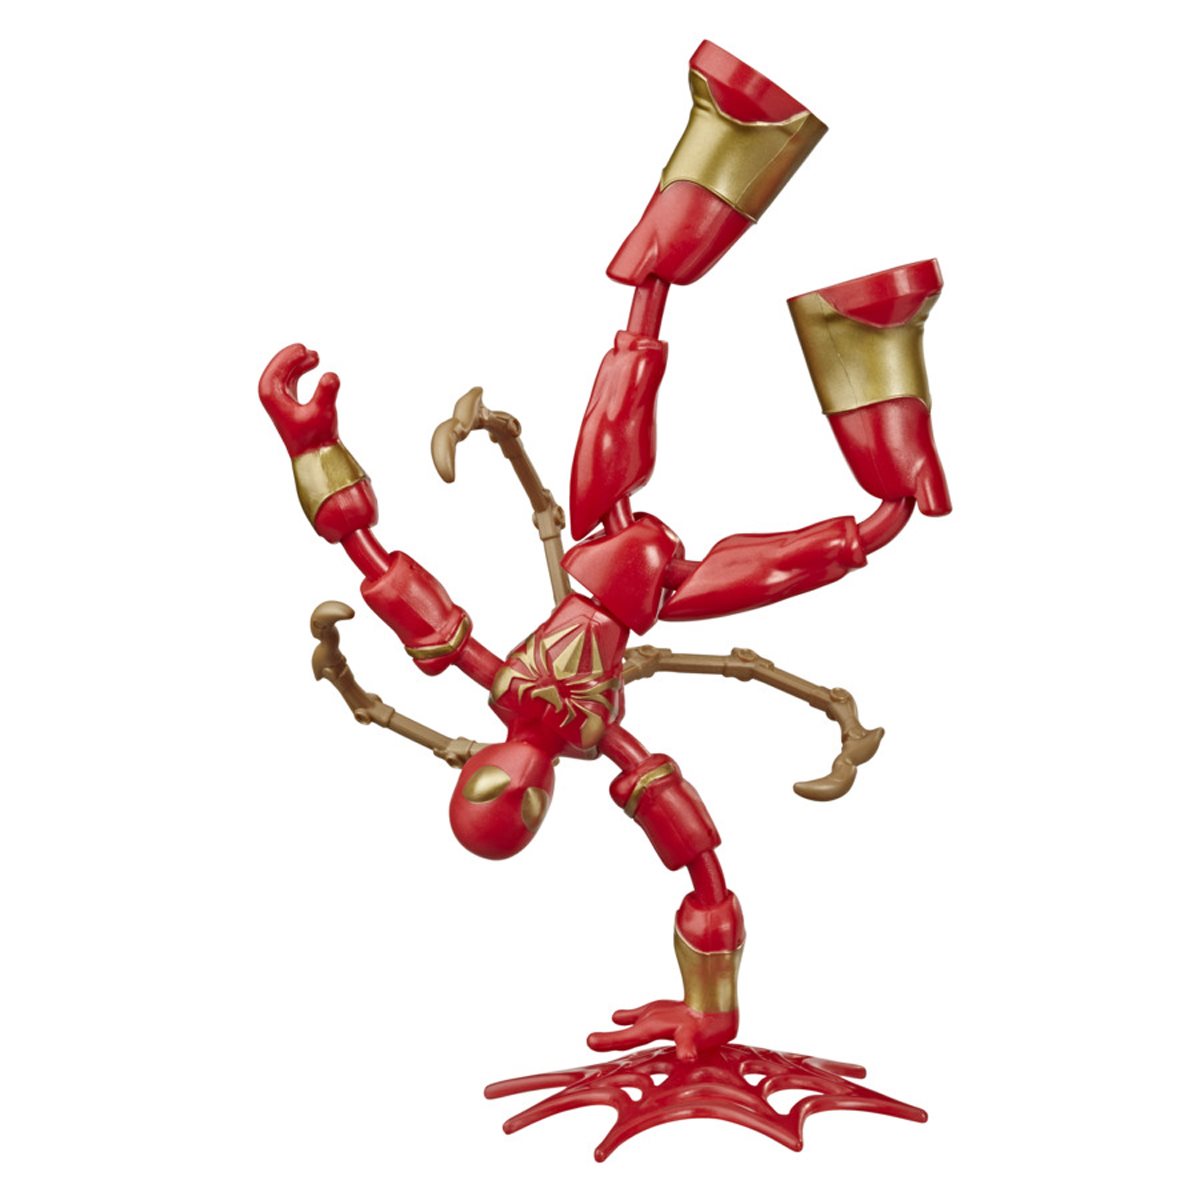 iron spider action figure